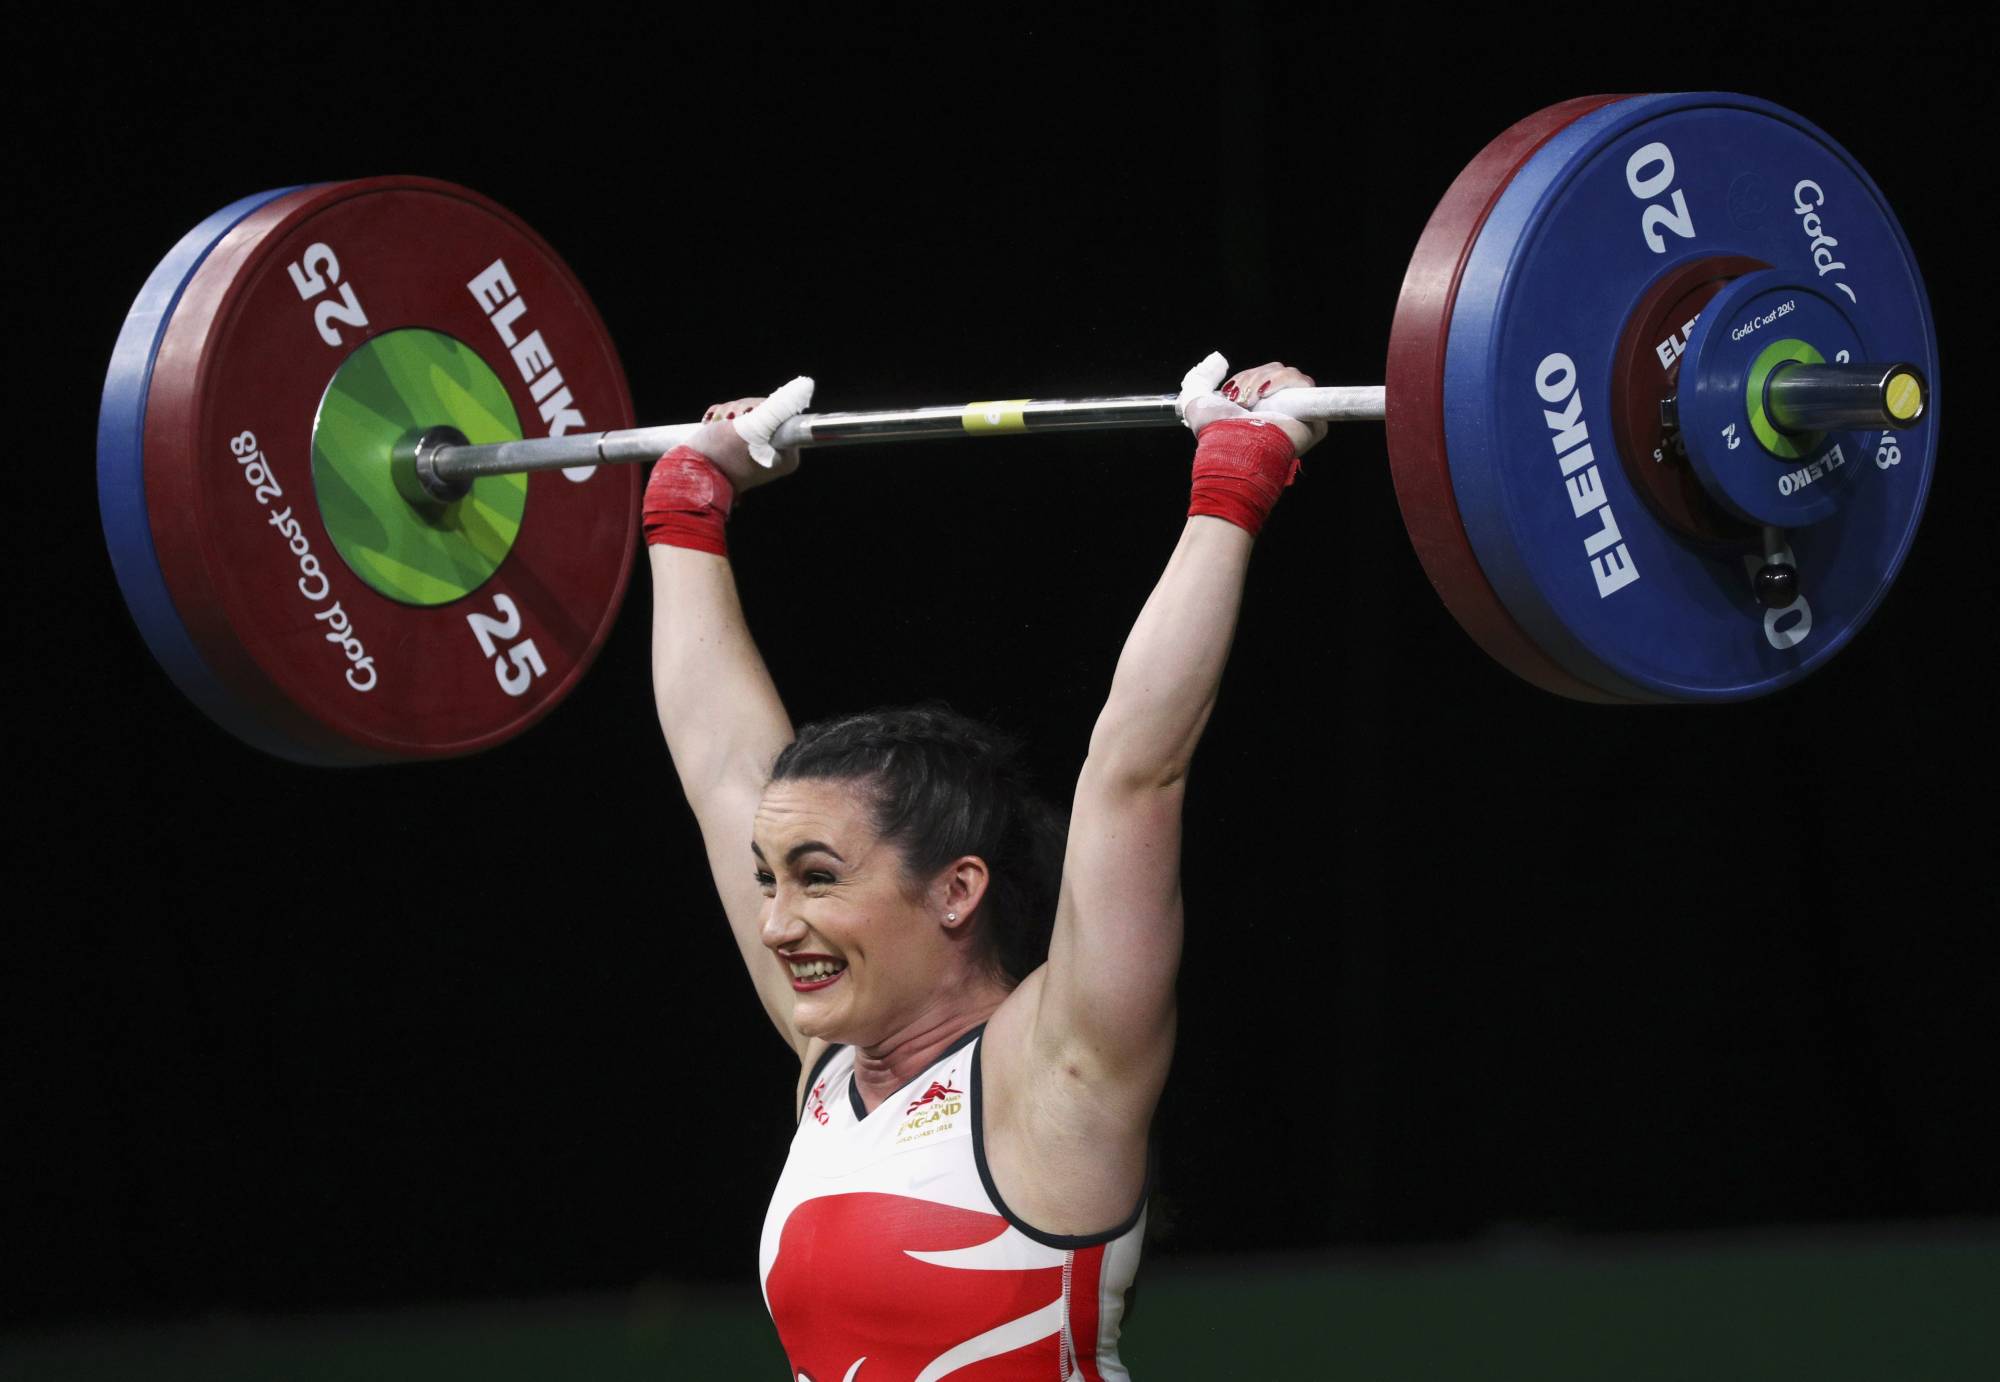 Strong is beautiful for Tokyo weightlifting hopeful Sarah Davies